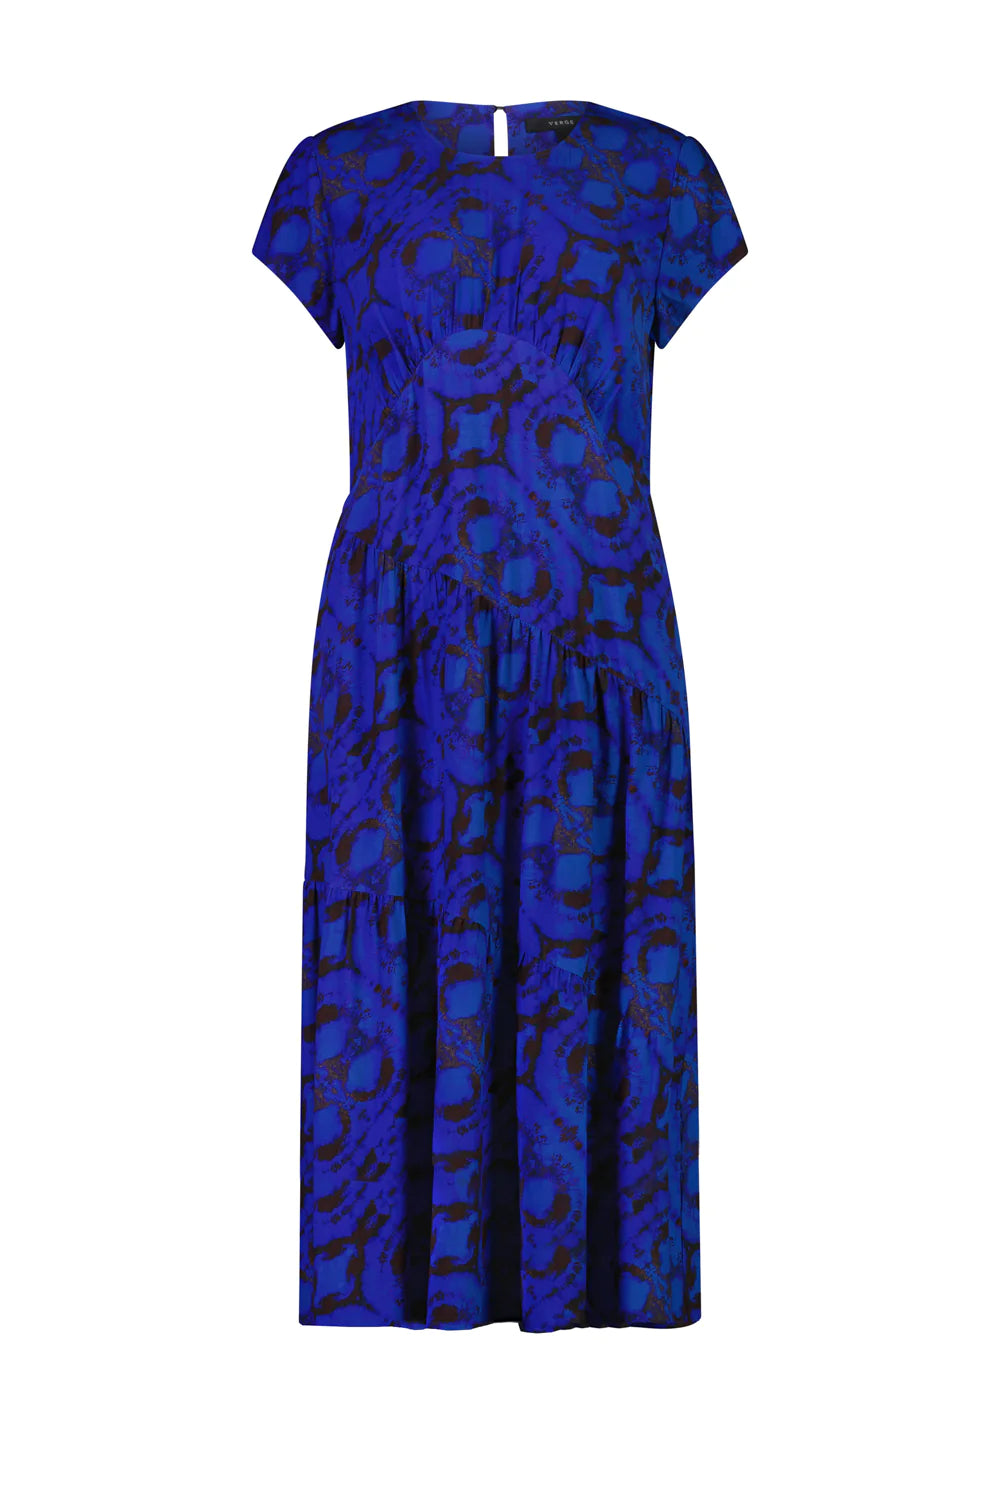 Verge Azure Dress - Print